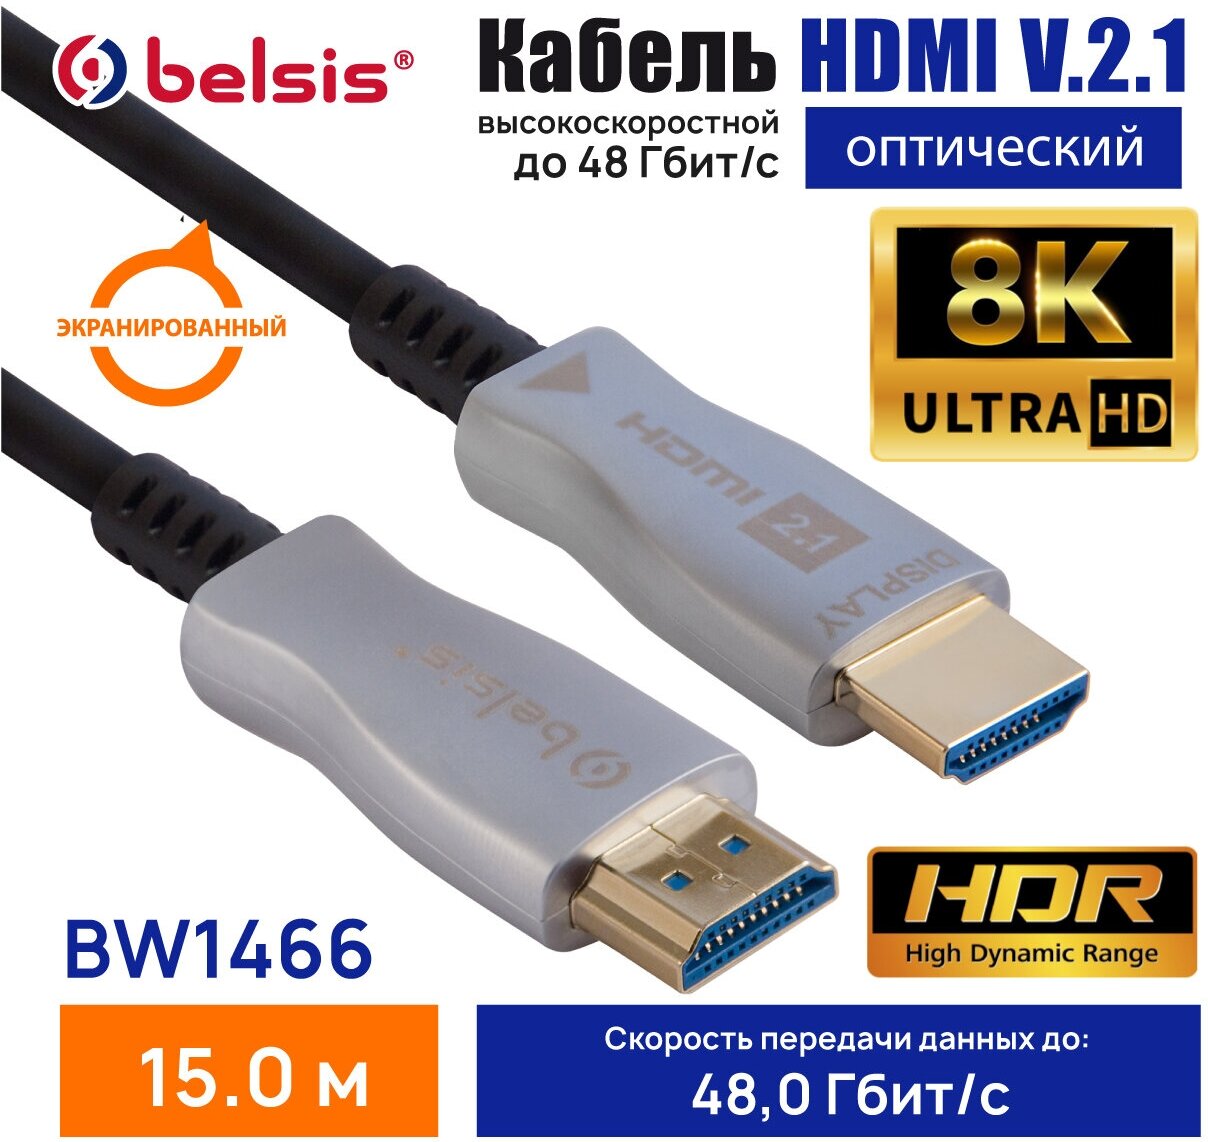 HDMI Кабель 2.1 8K, Оптический, Belsis, Длина 15 метров / BW1466